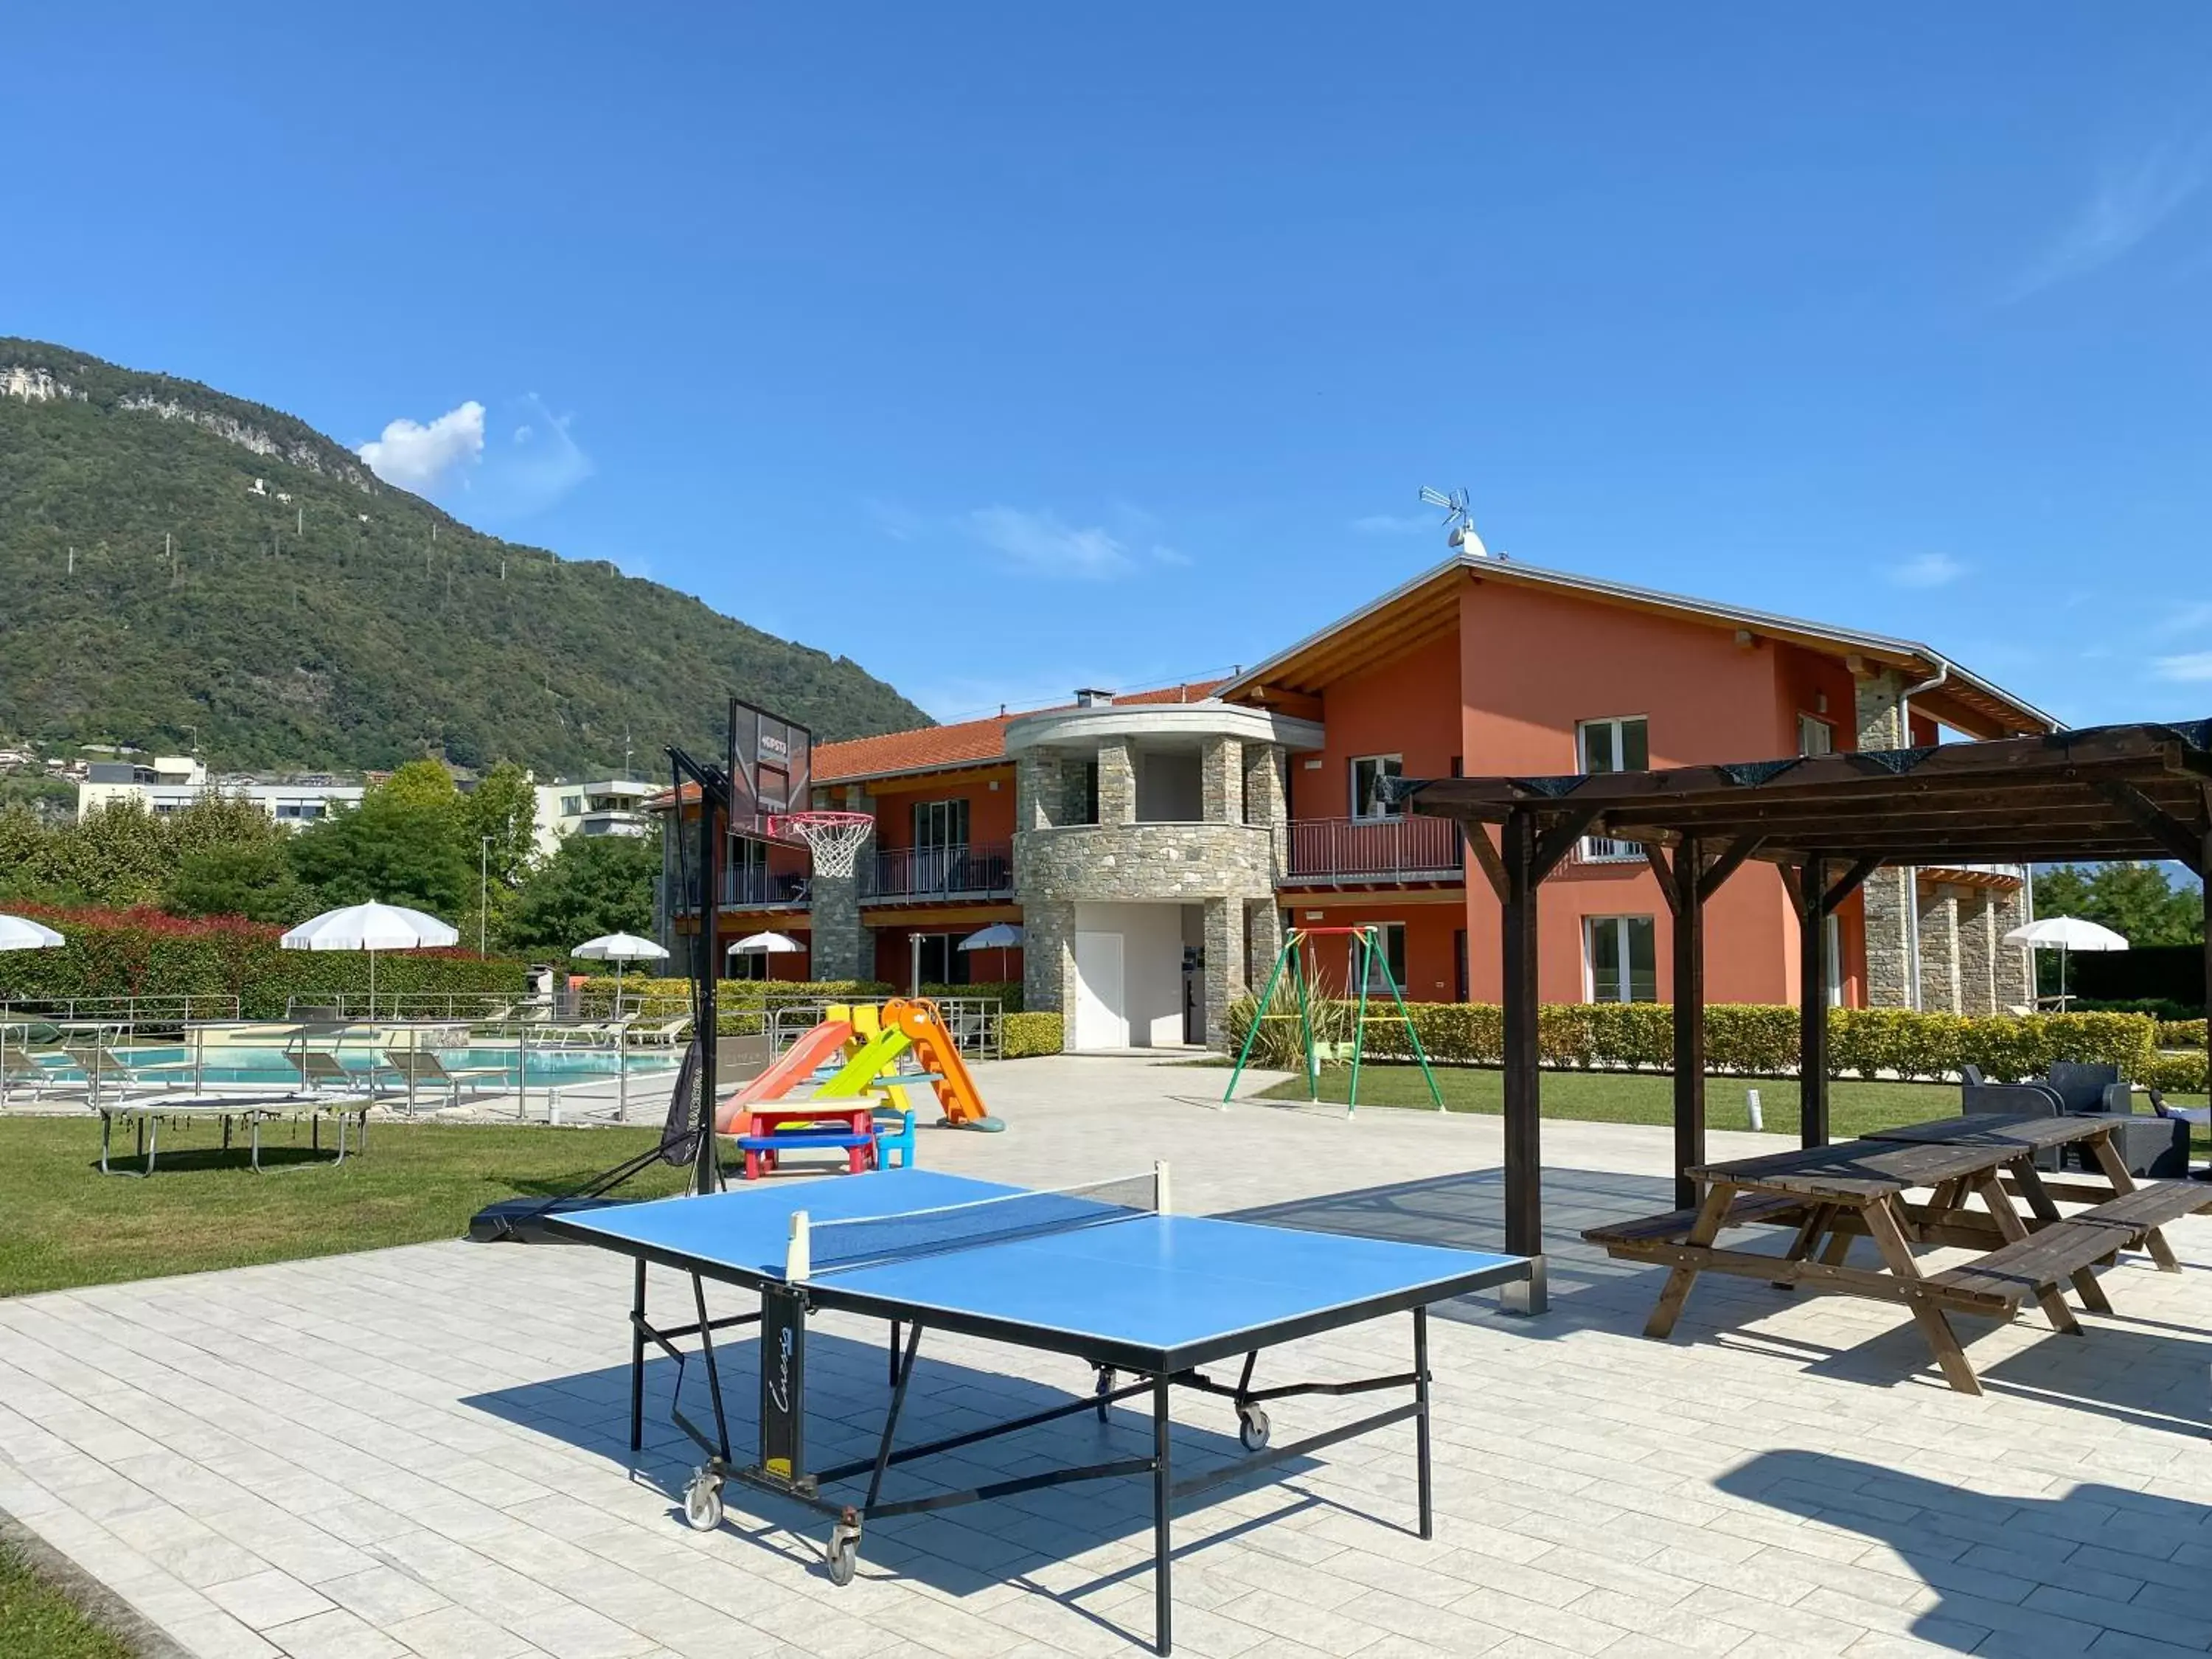 Table Tennis in Residence Villa Paradiso